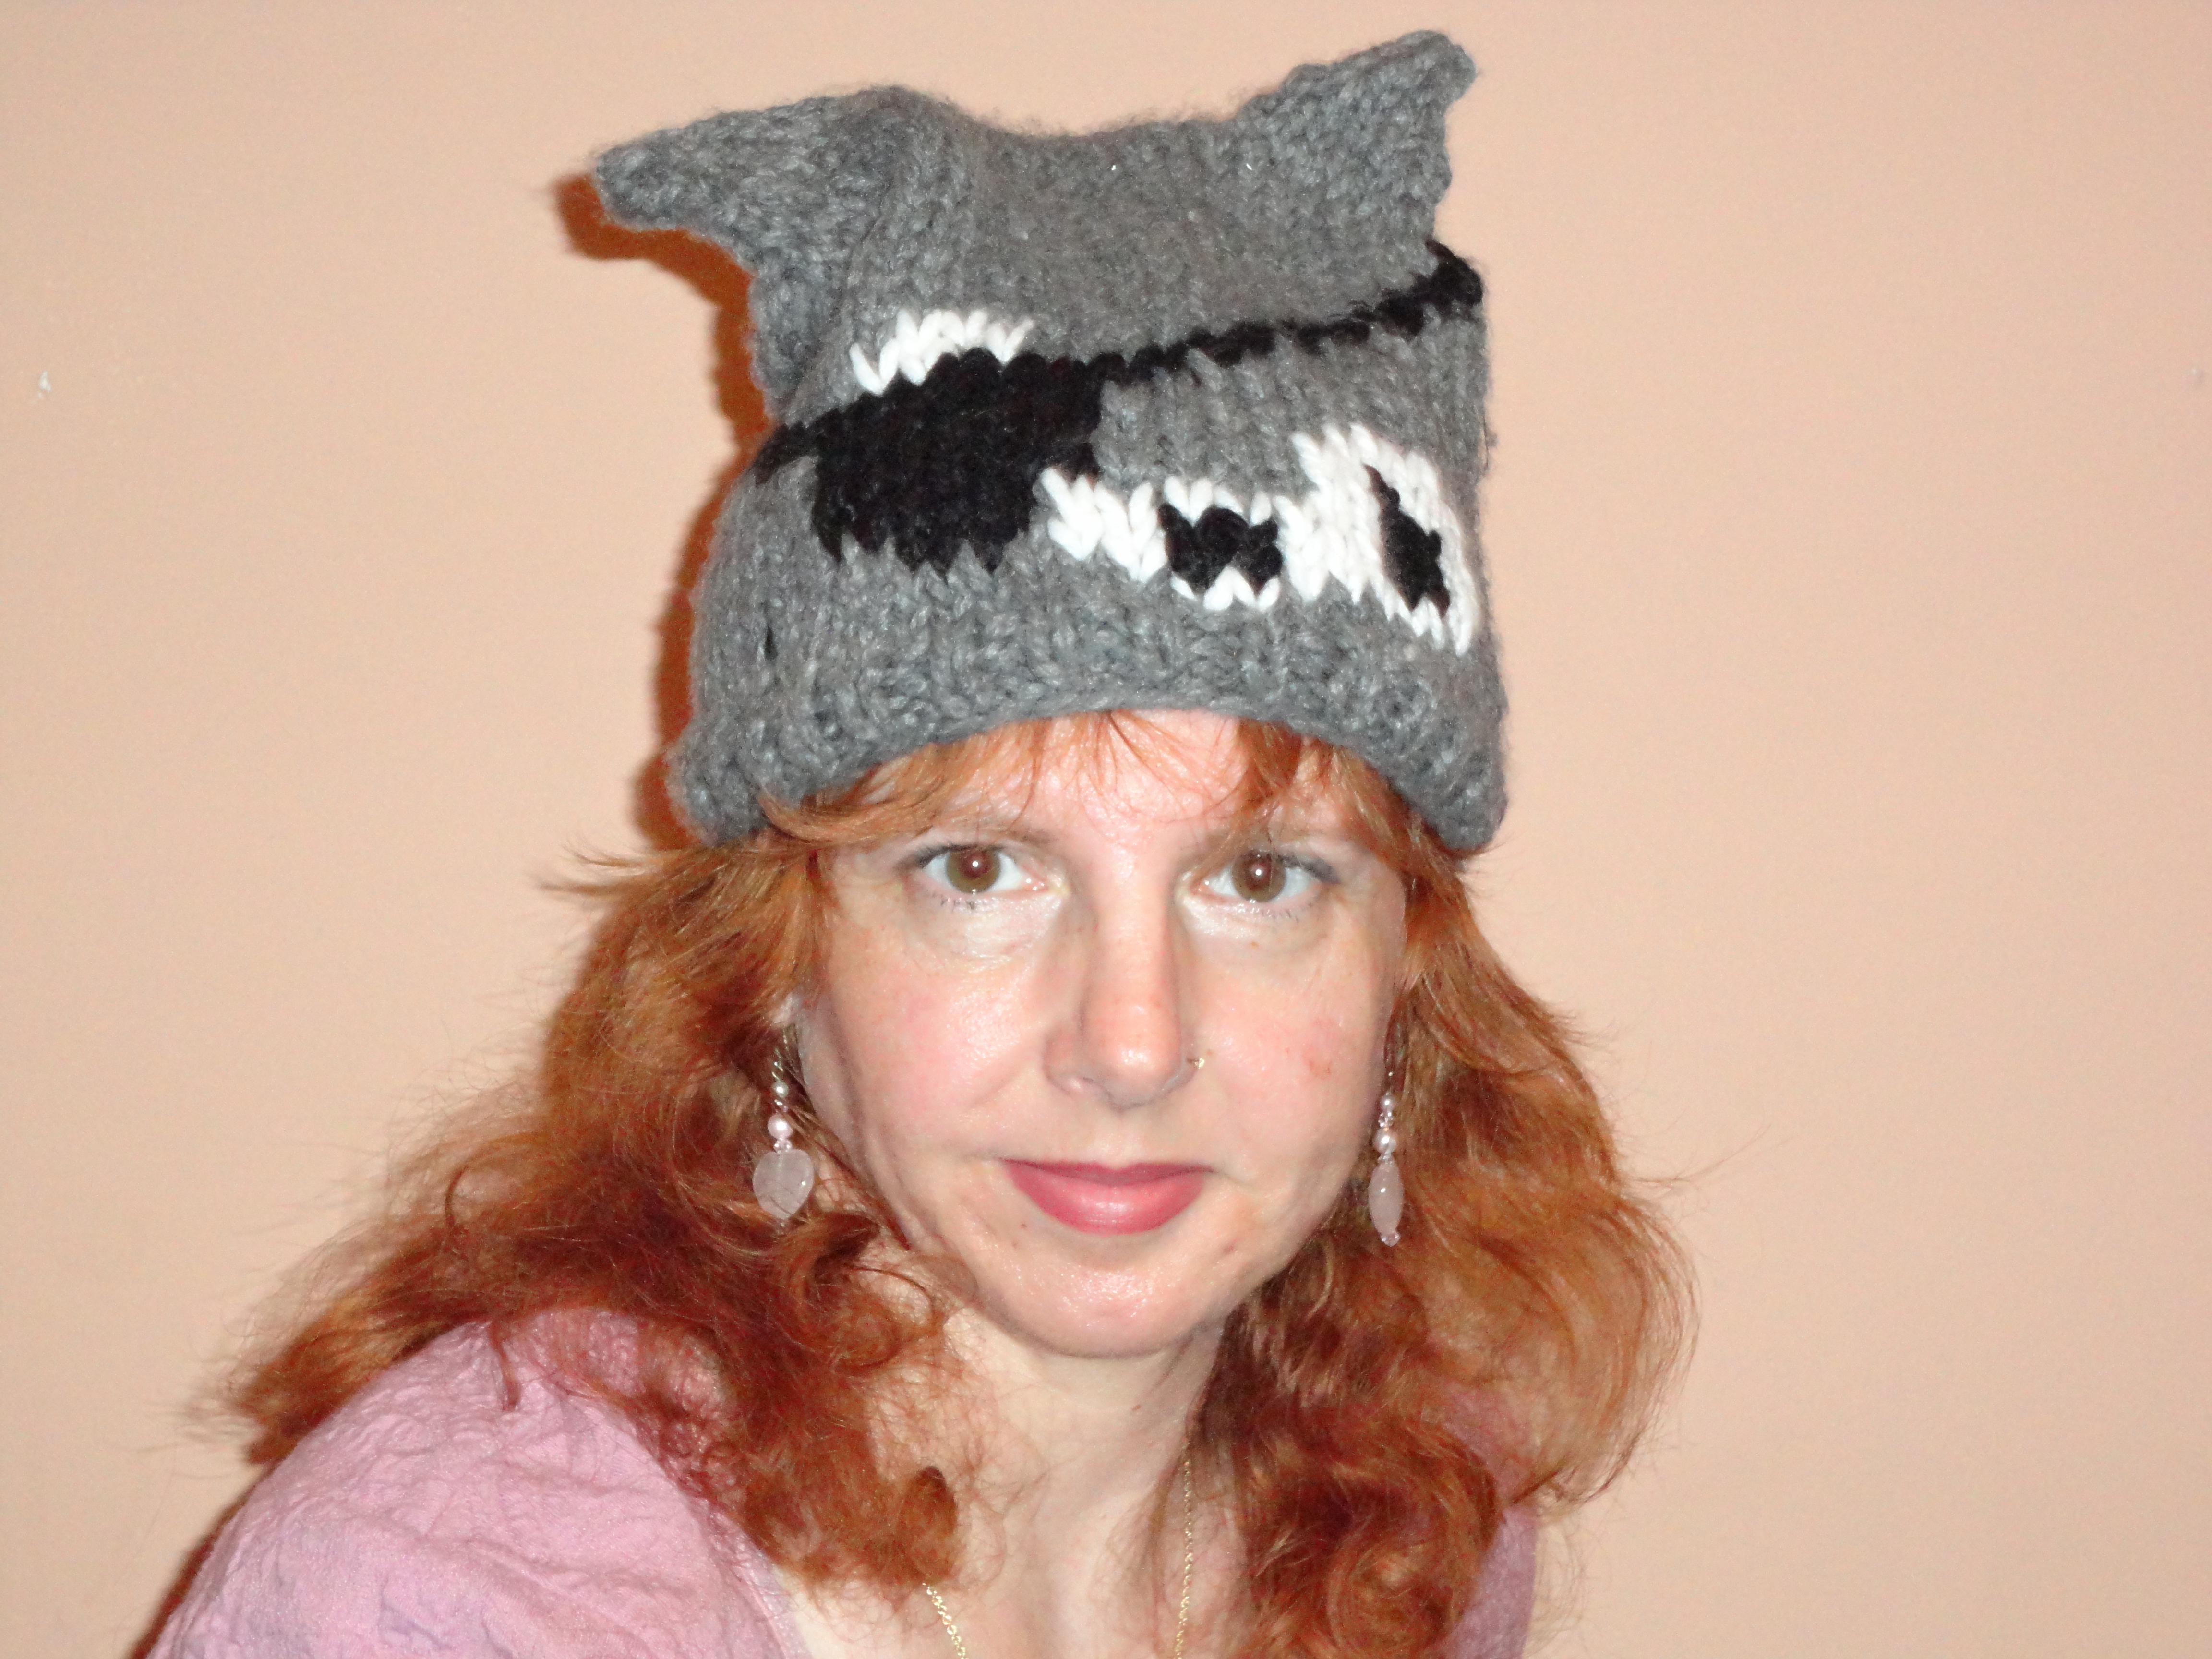 Anita in her kitty hat.